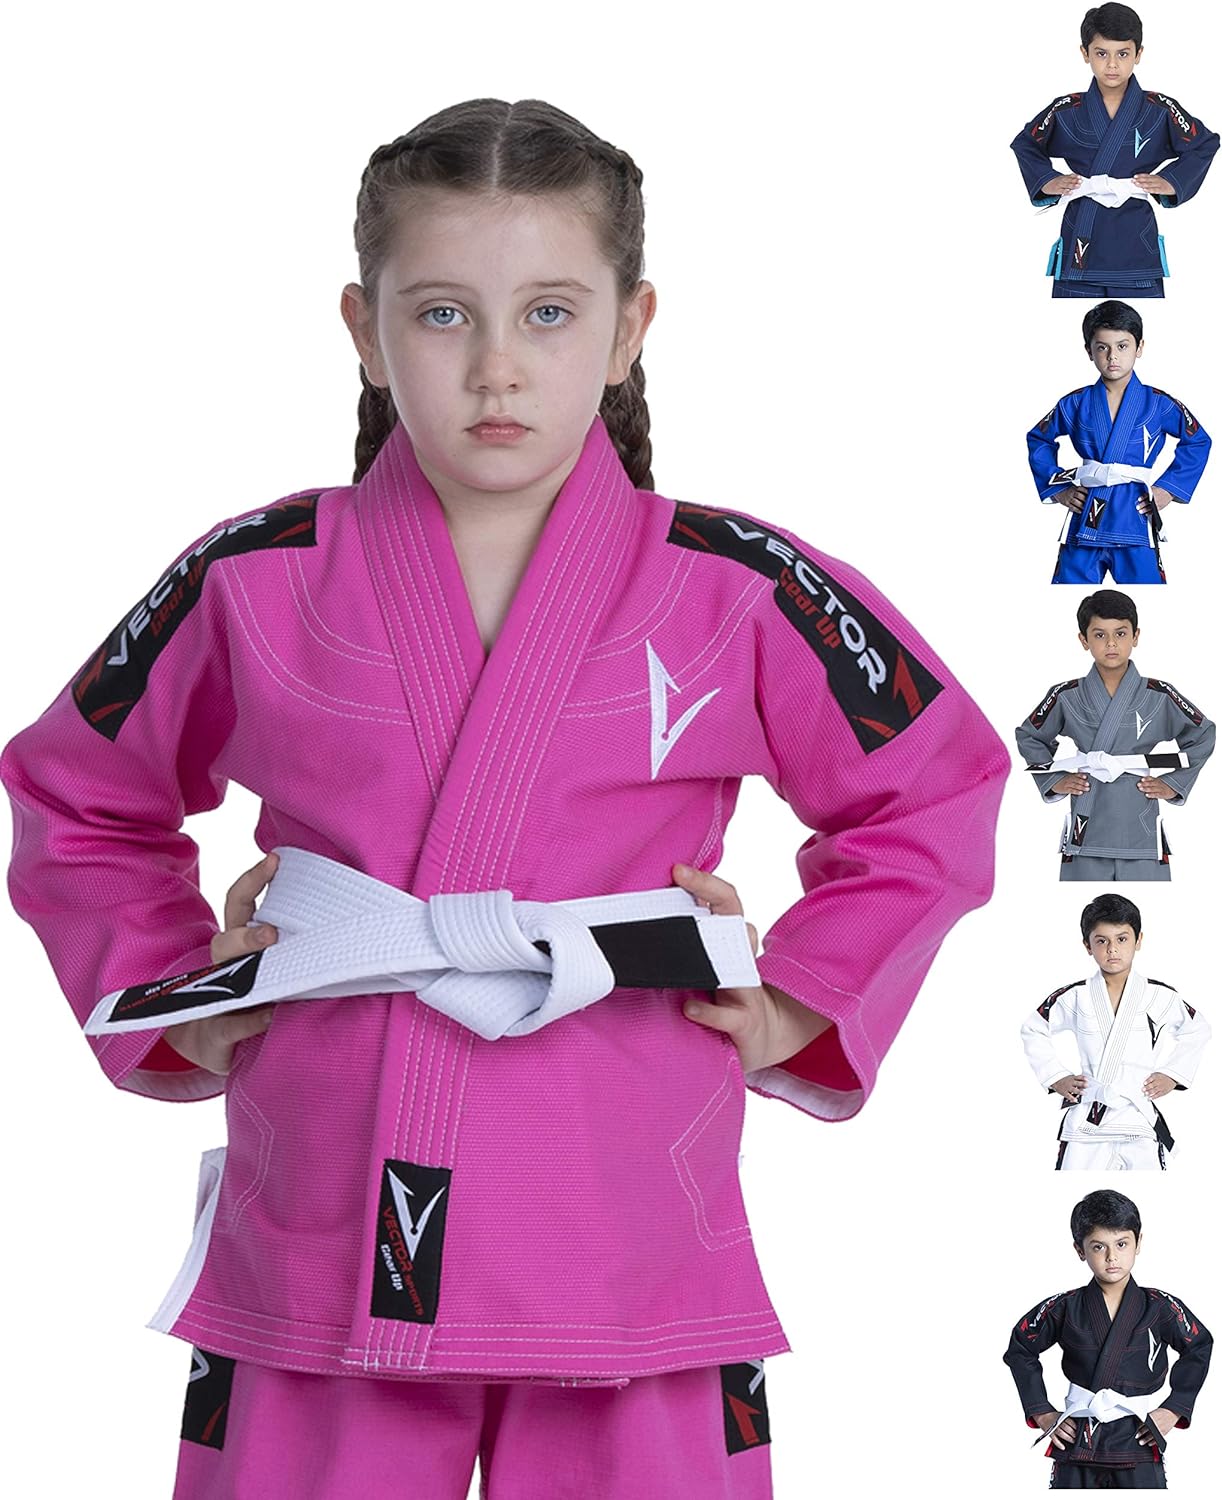 Eclipse Martial Art Supplies sporting goods K0 / Pink Brazilian BJJ Gi Jiu Jitsu Gi for Child Kids Gi Uniform Durable Pant & Jacket 100% Cotton with Free Belt